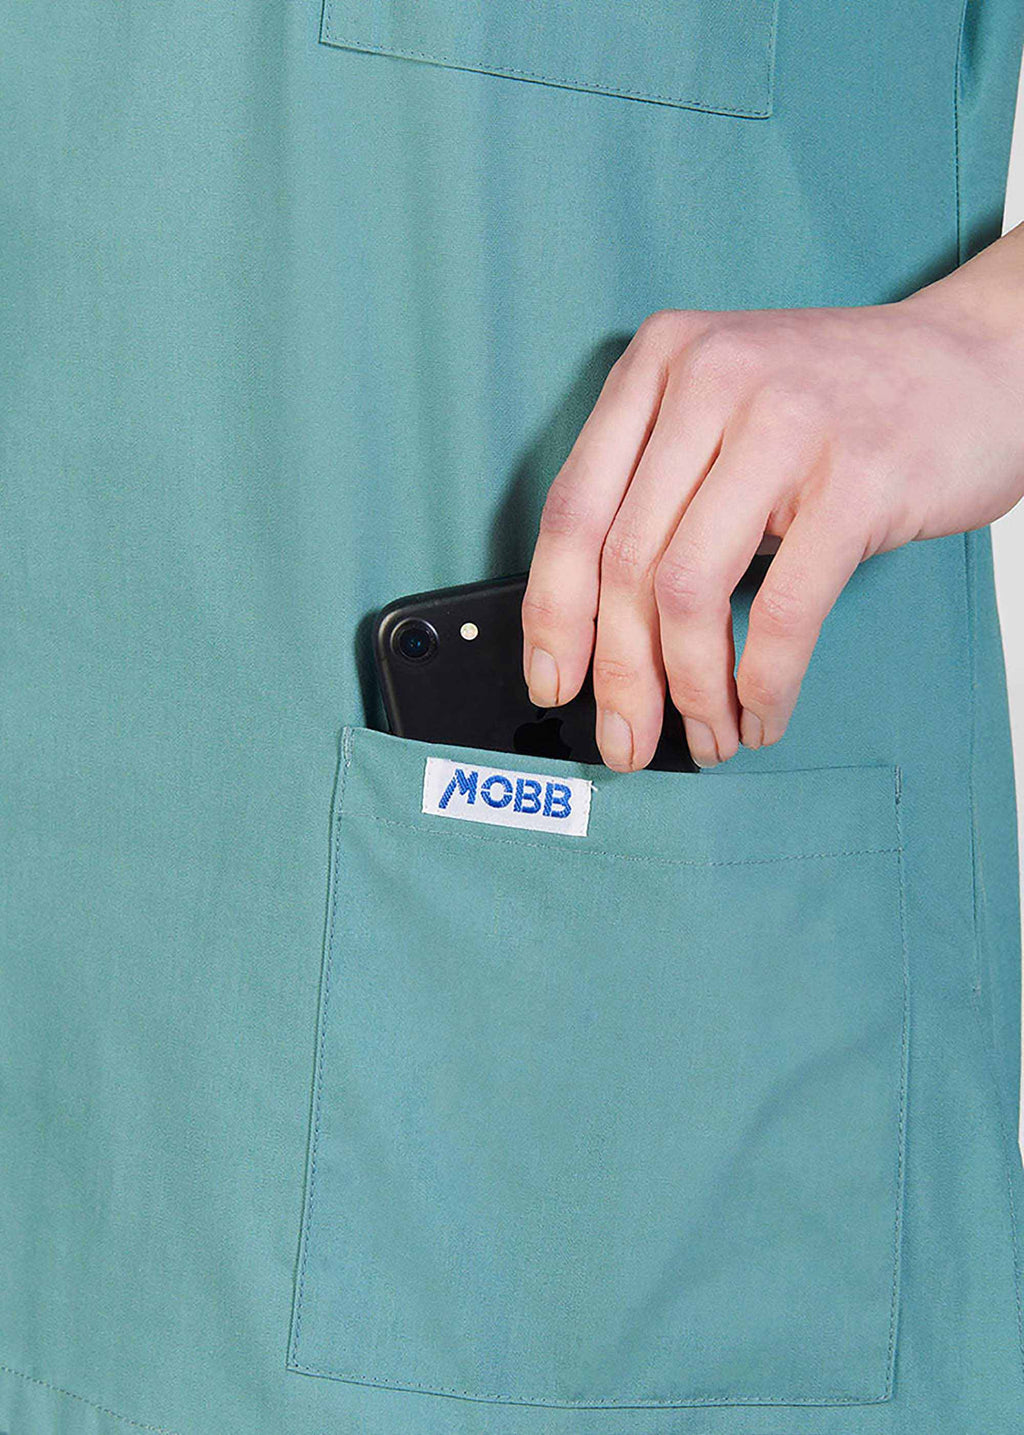 Product - MOBB Clearance 3 Pocket V-Neck Scrub Top